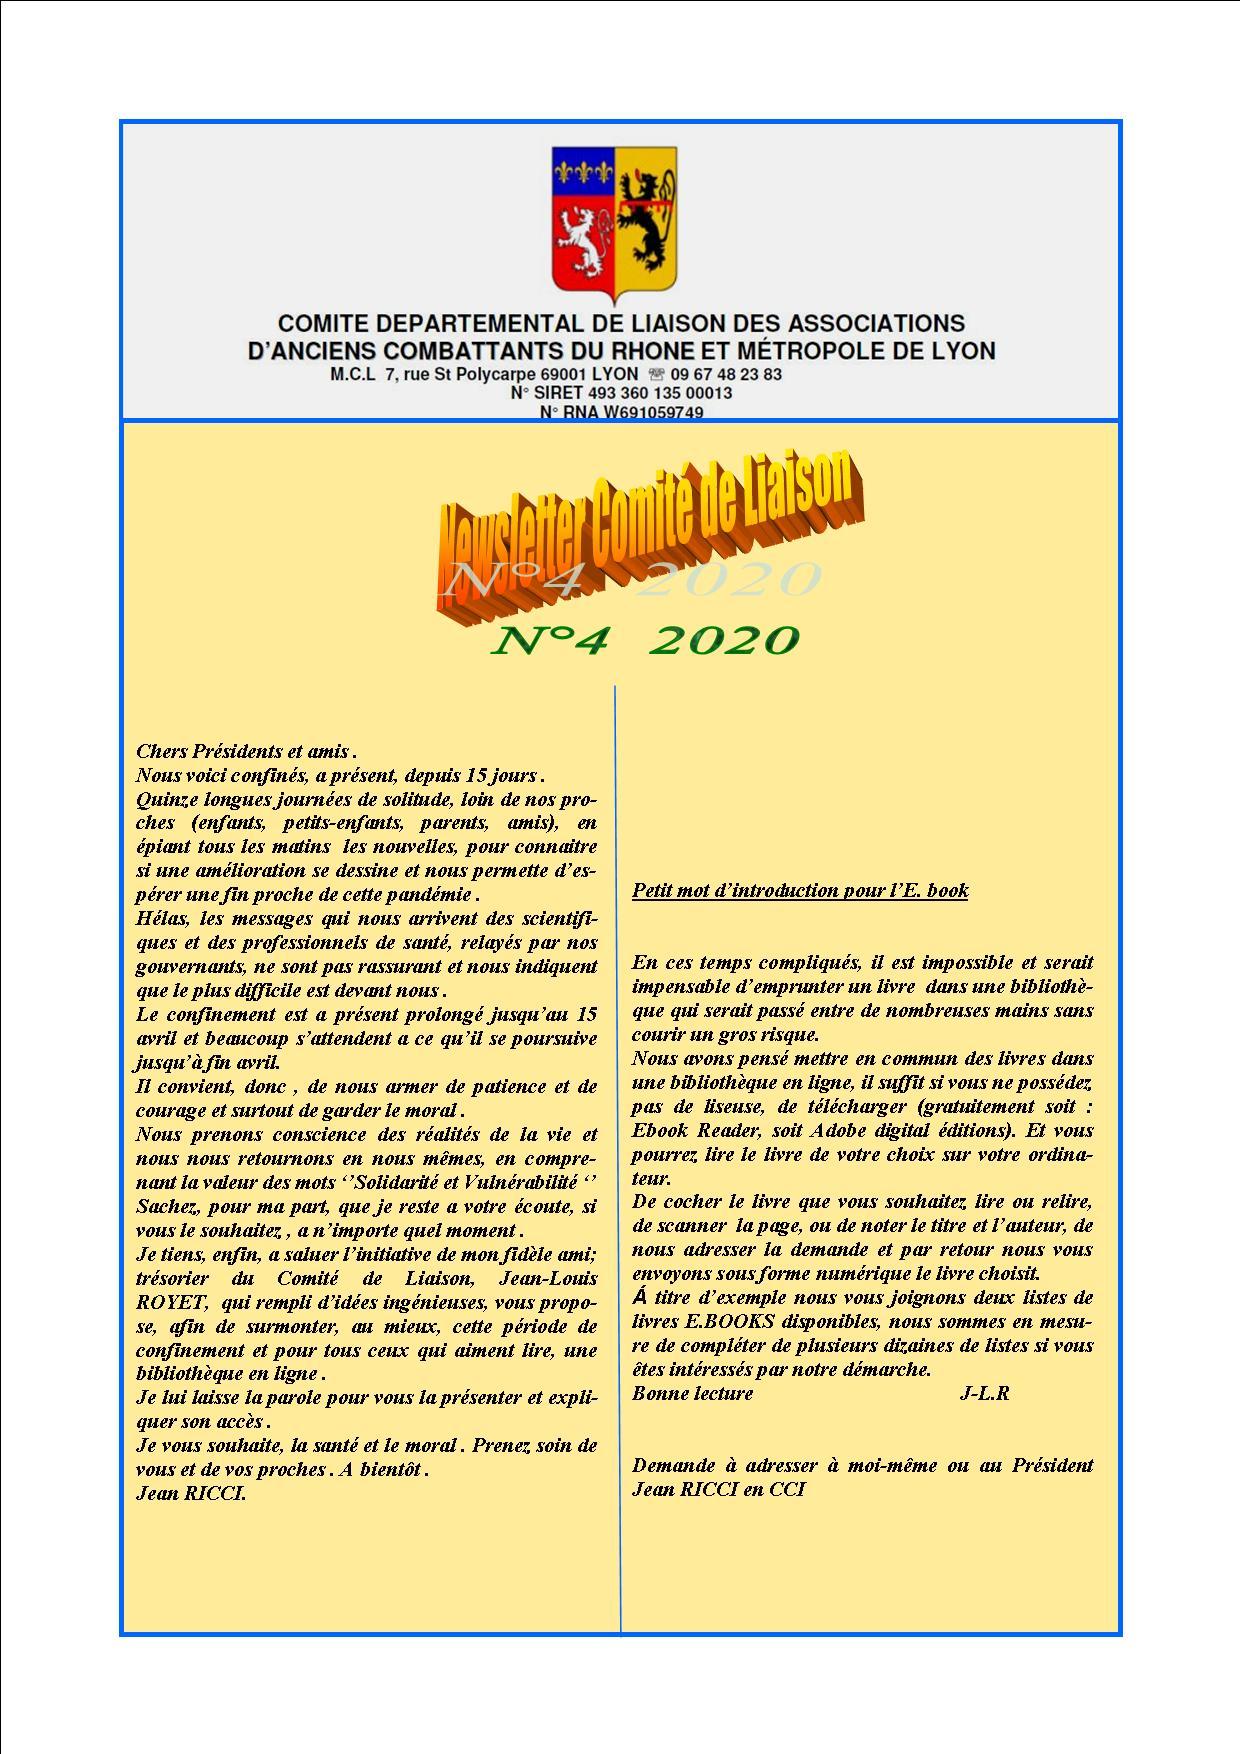 Newsletter comite de liaisonn 4 2020